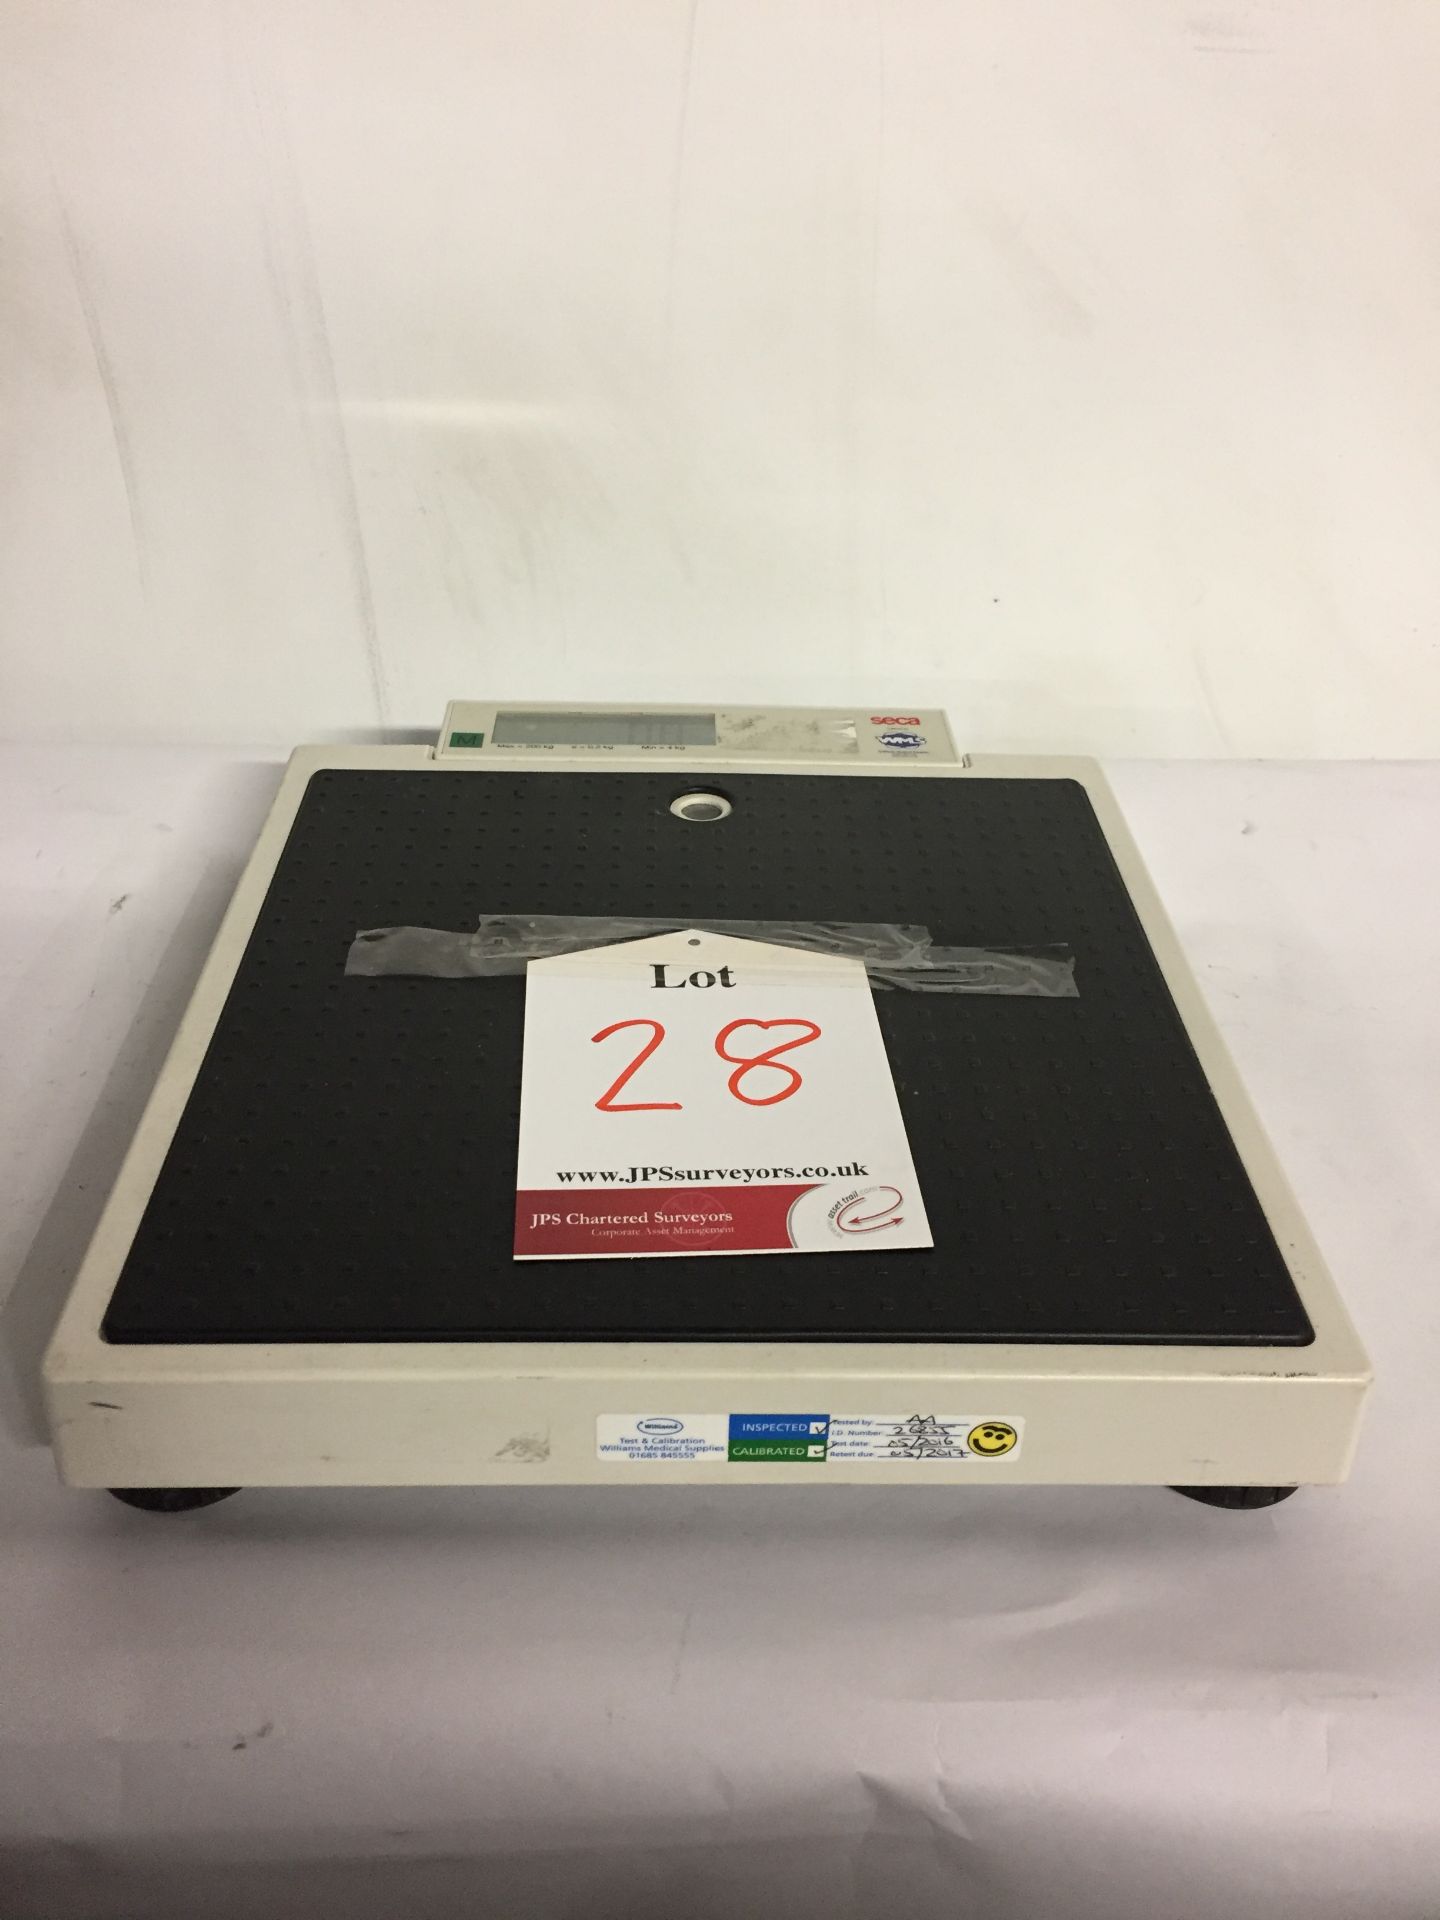 Seca Digital Weighing scales in White - Image 2 of 2